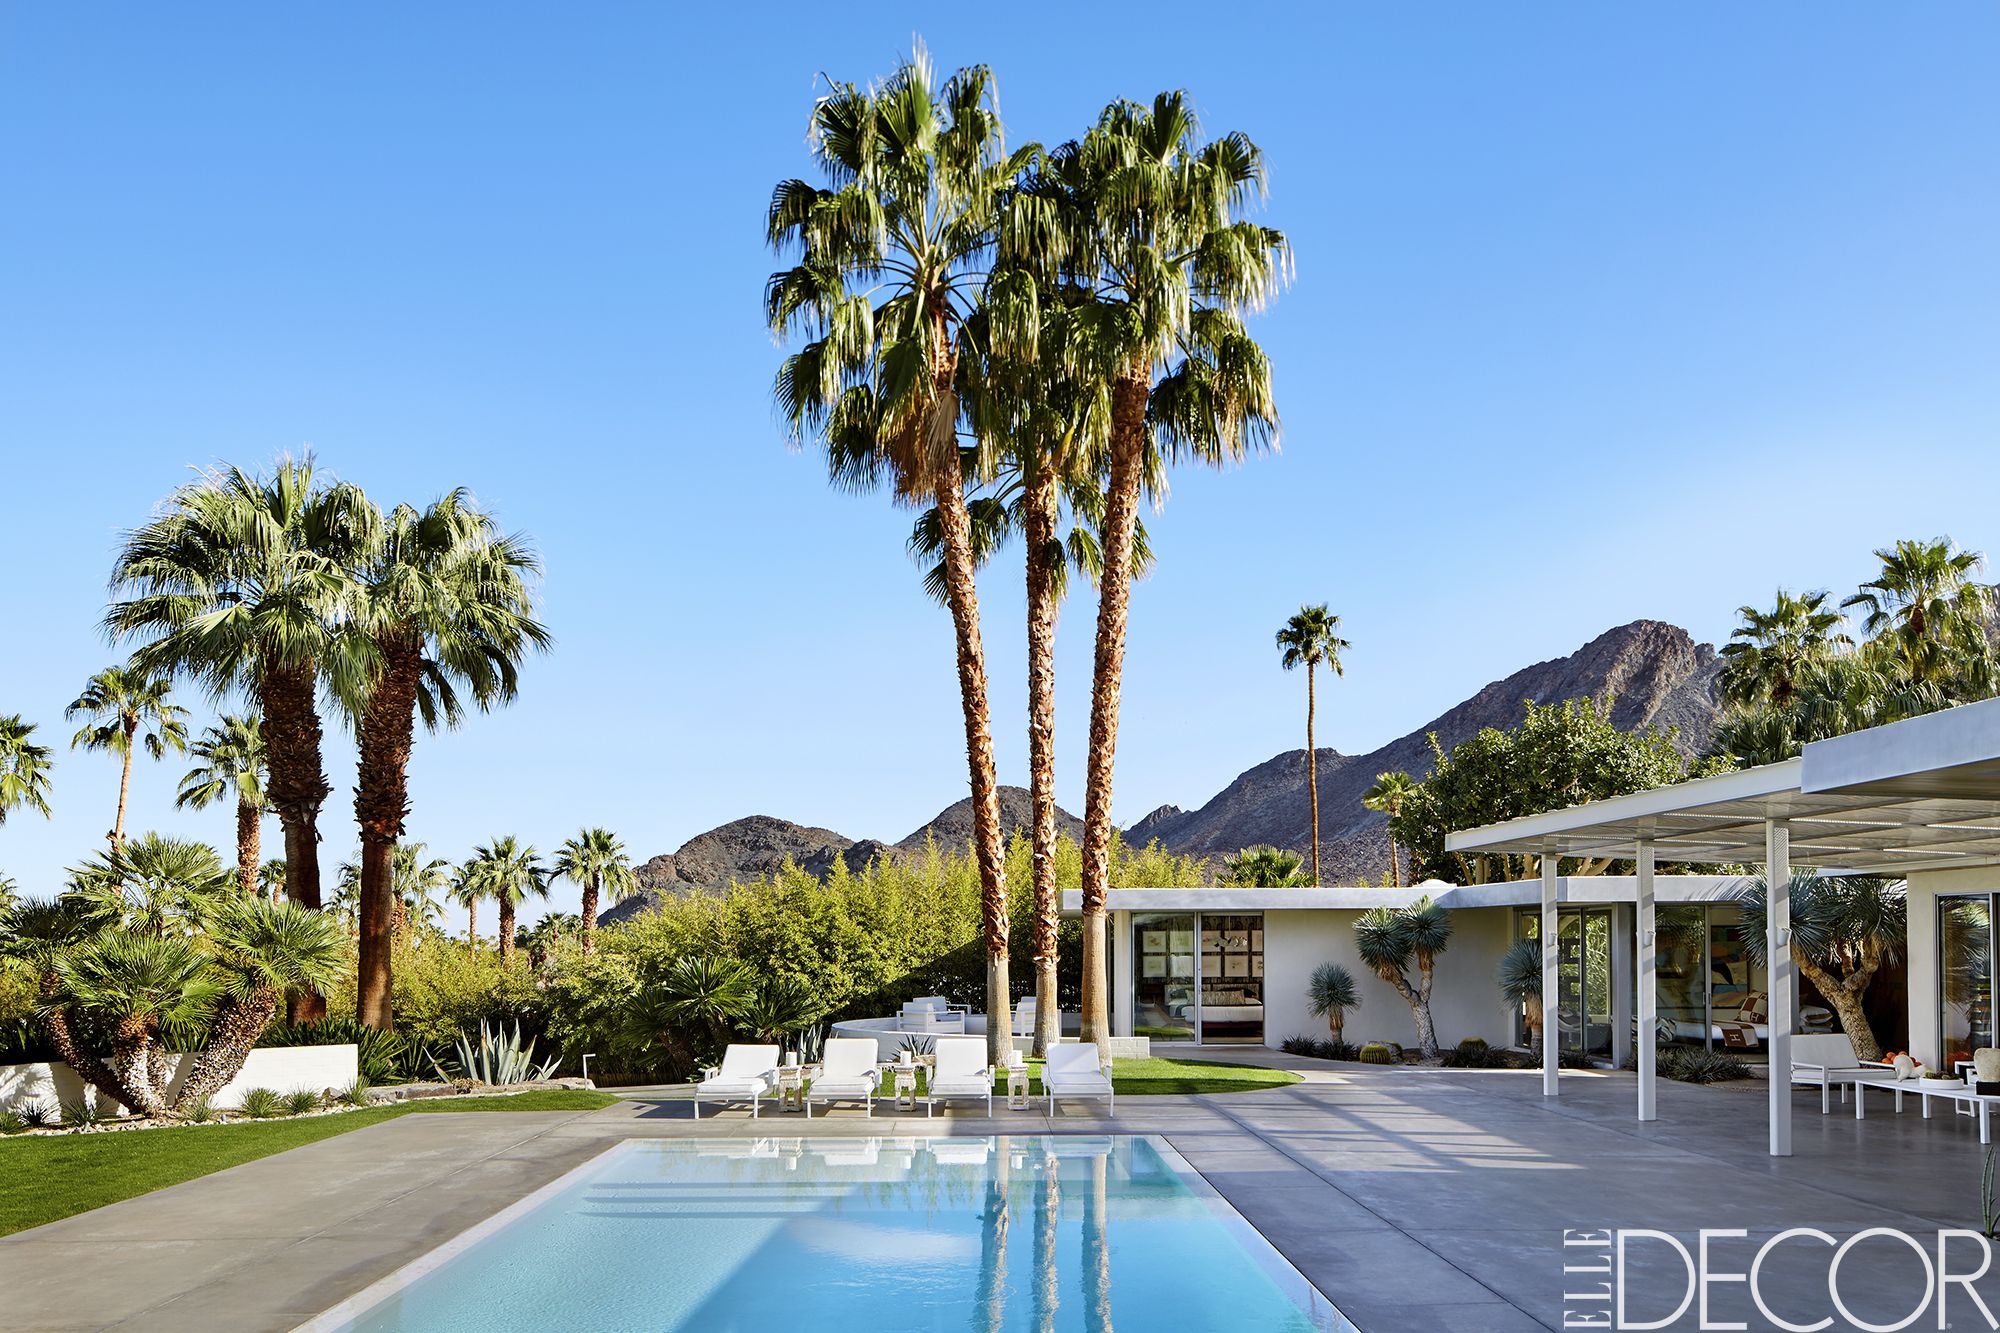 Tour A Luxurious Palm Springs Home - Thunderbird Country Club